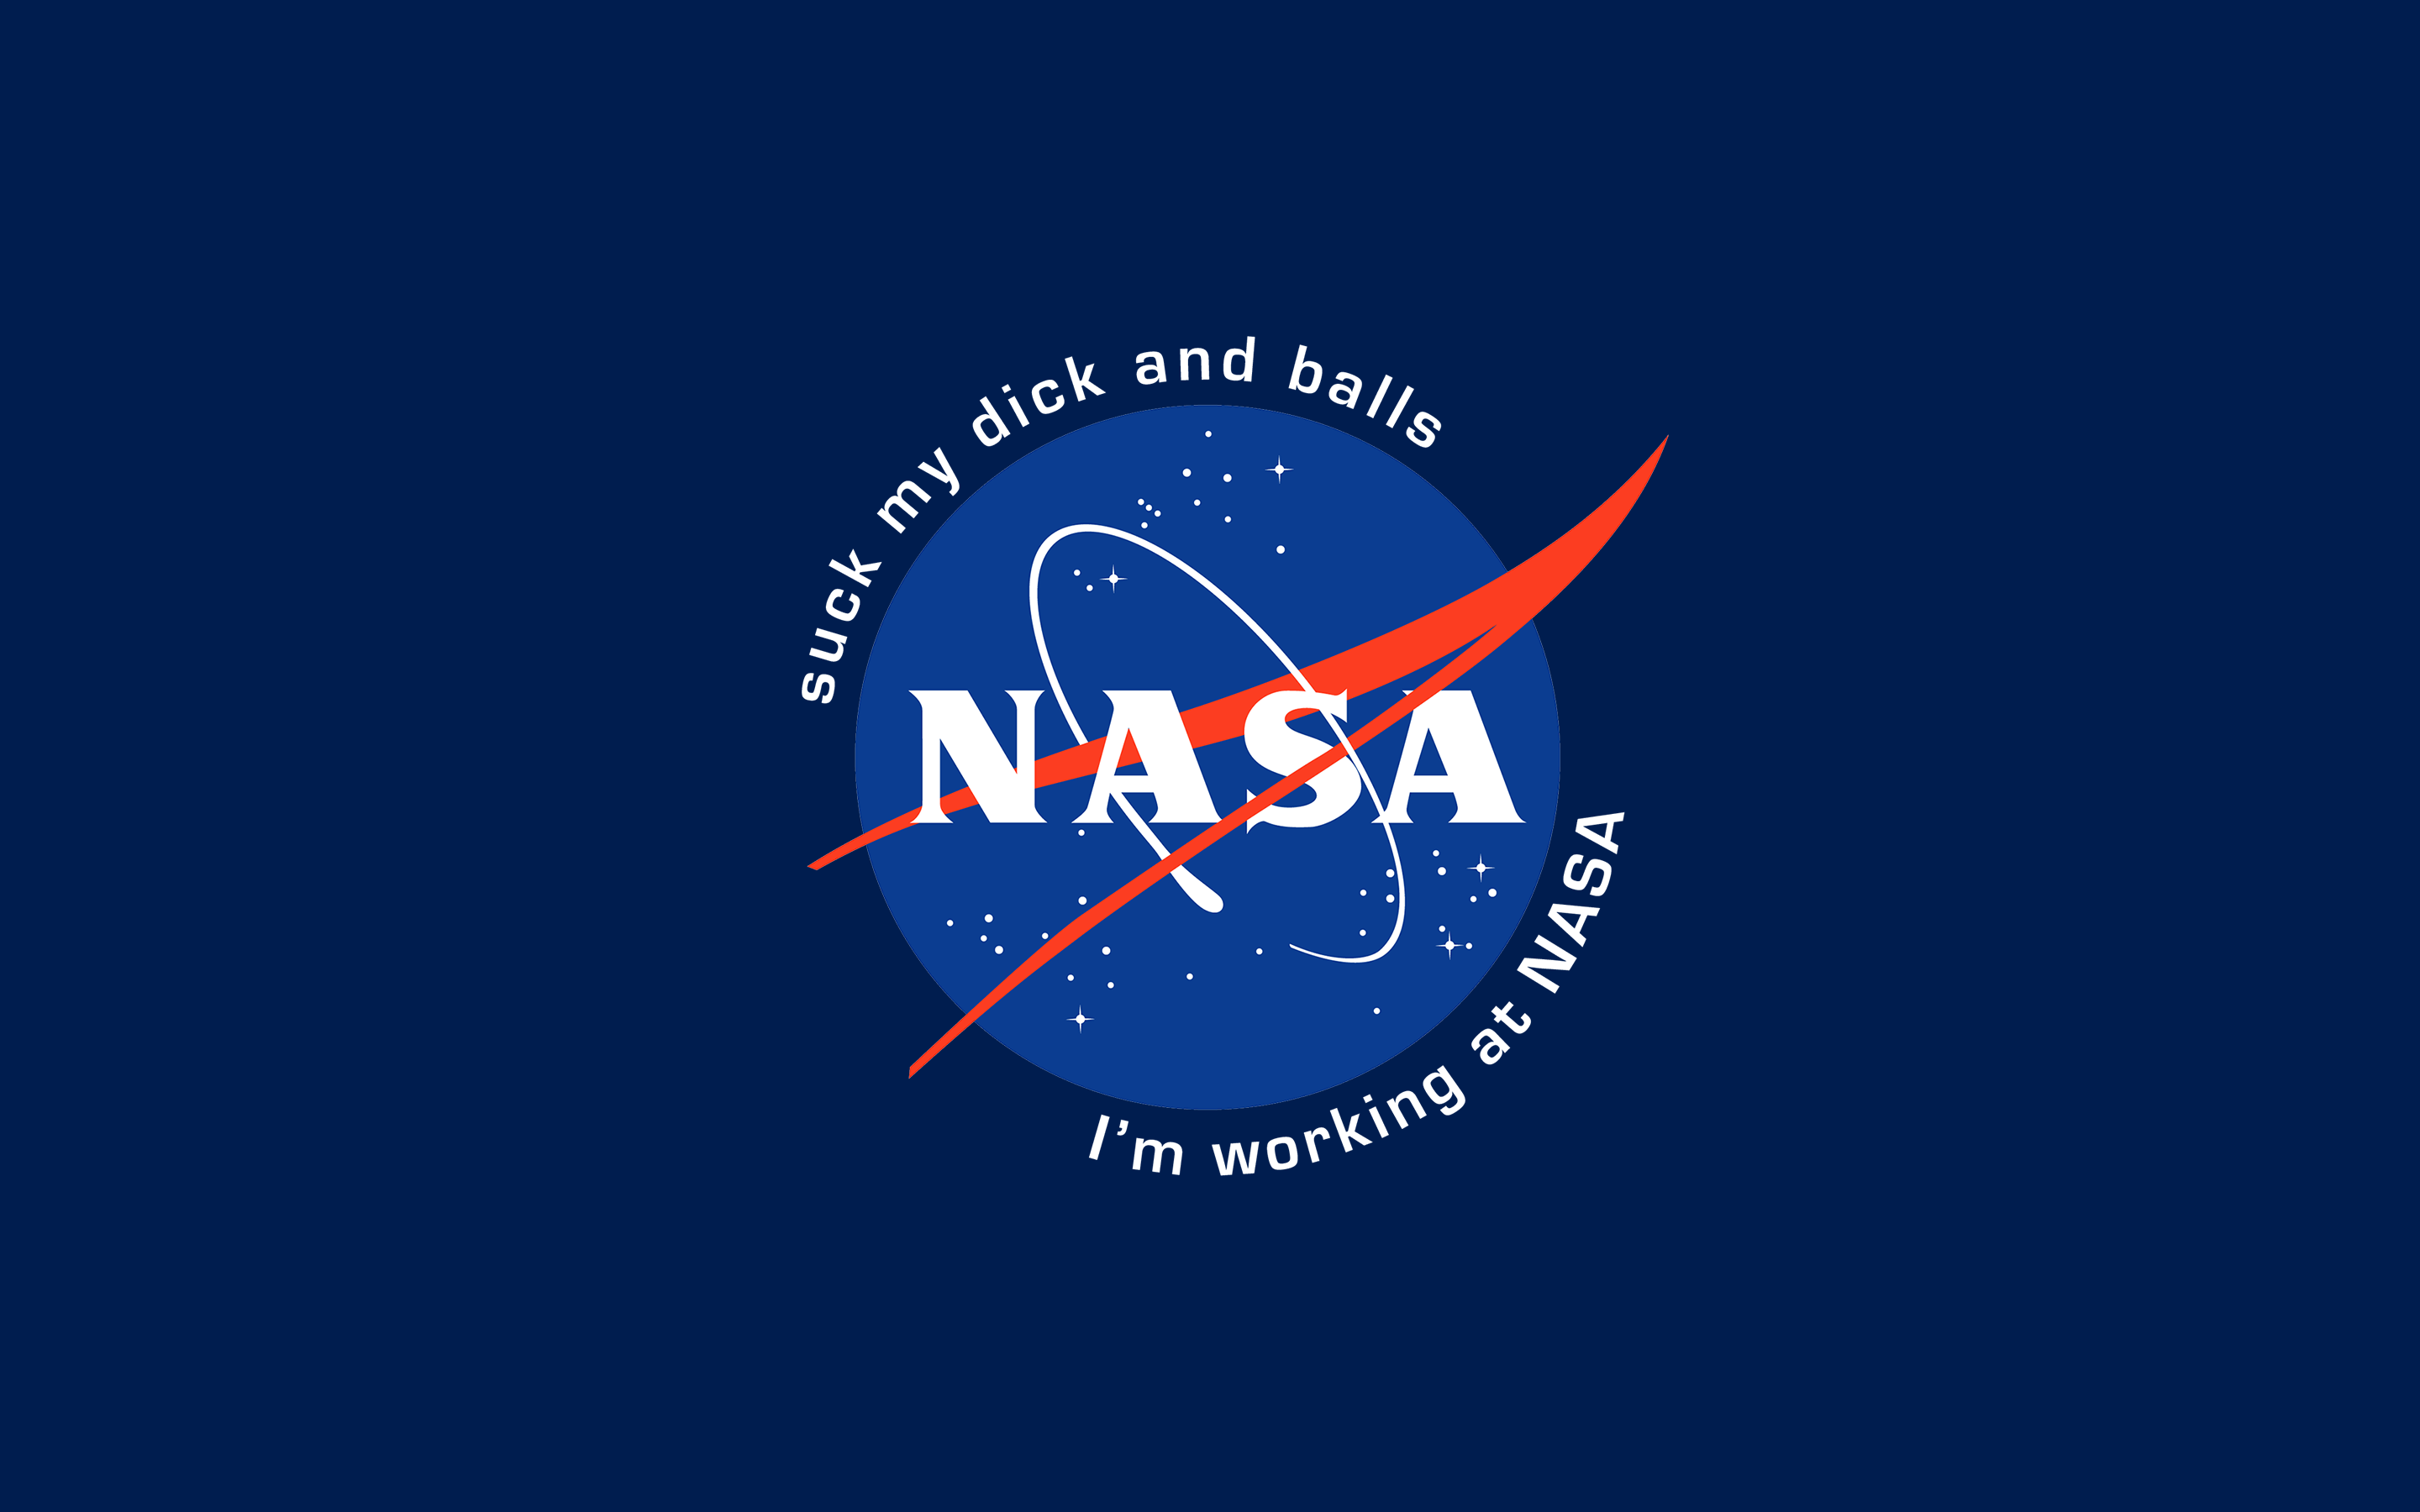 General 2880x1800 NASA memes humor minimalism logo blue simple background digital art profanity